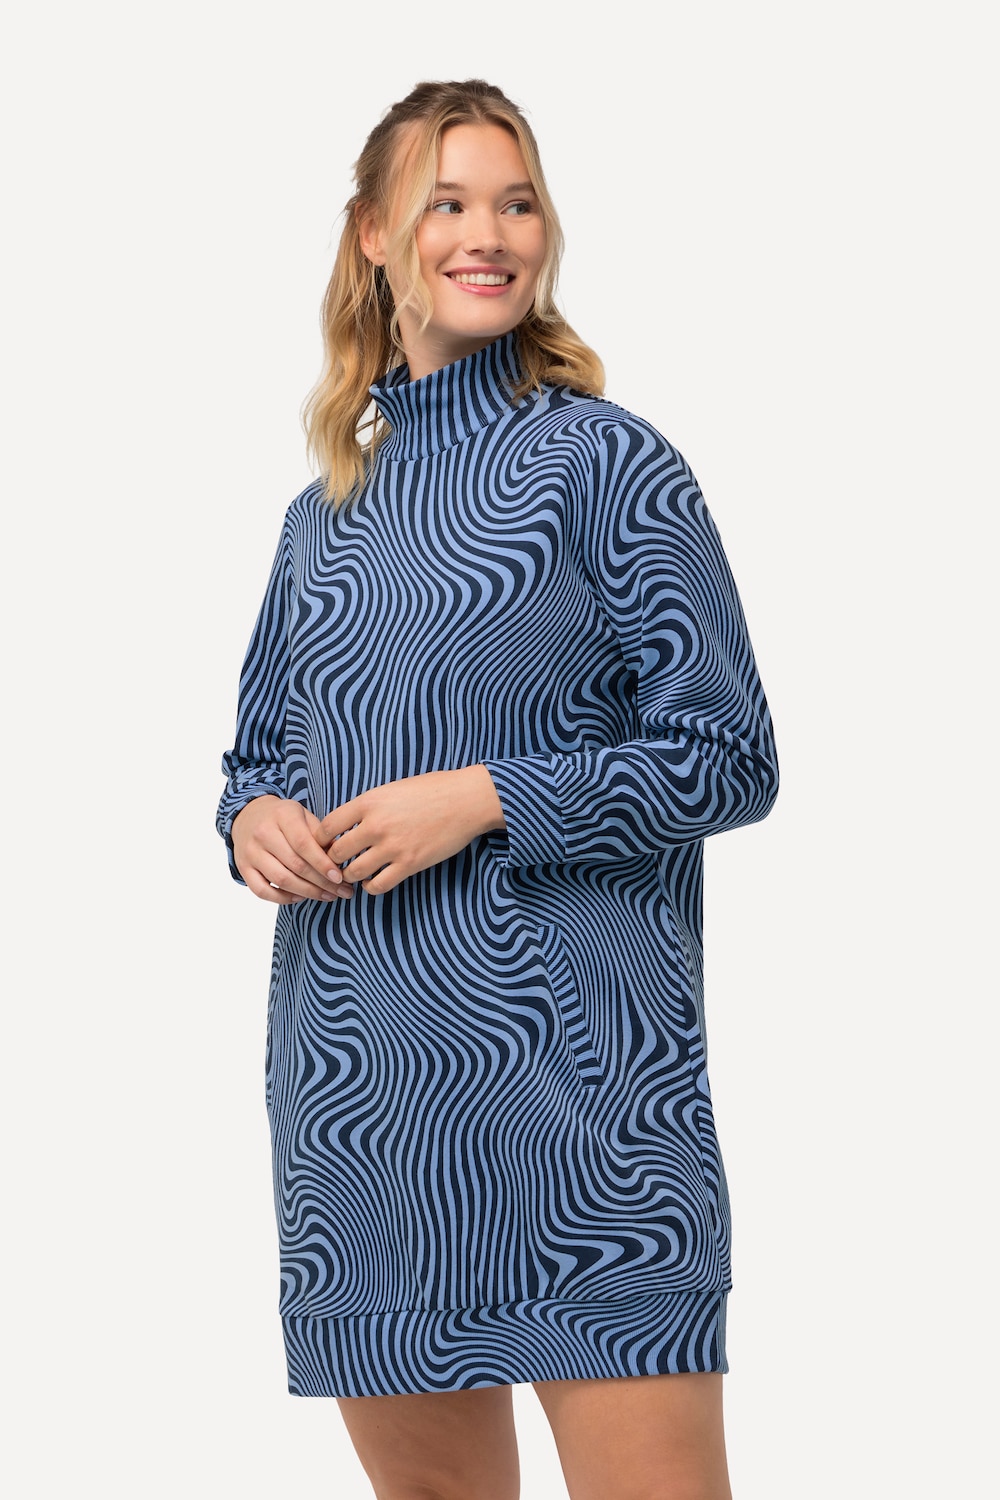 Grote Maten Loungewear jurk, Dames, blauw, Maat: 50/52, Katoen/Polyester, Ulla Popken